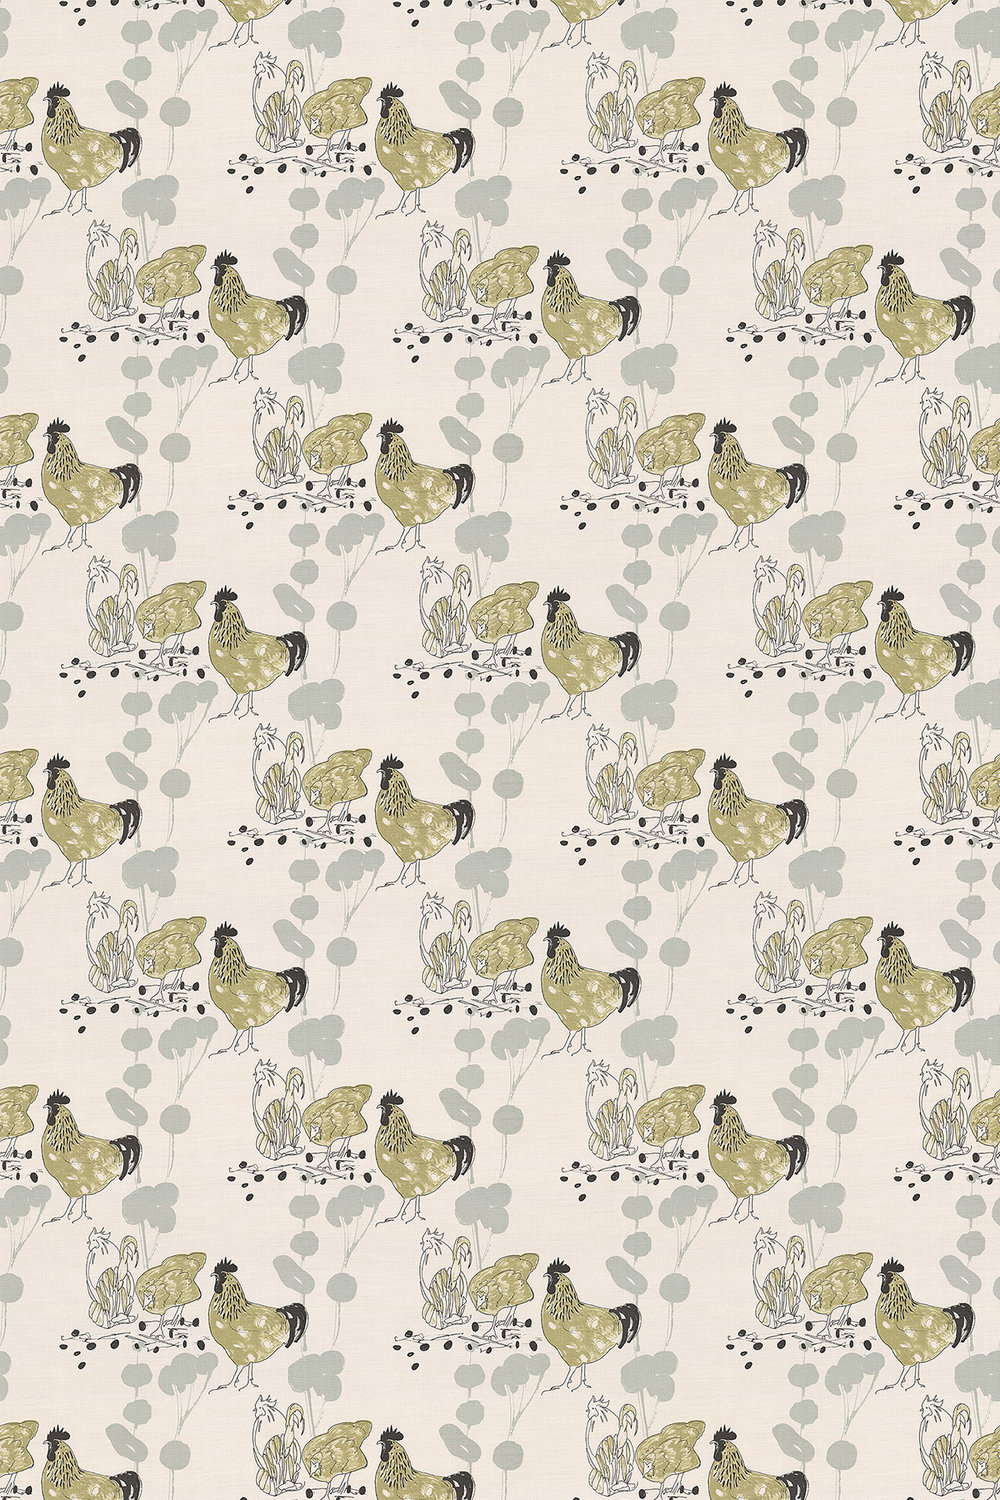 Linen Union Chicken 01 Fabric - Aqua / Green - by Belynda Sharples